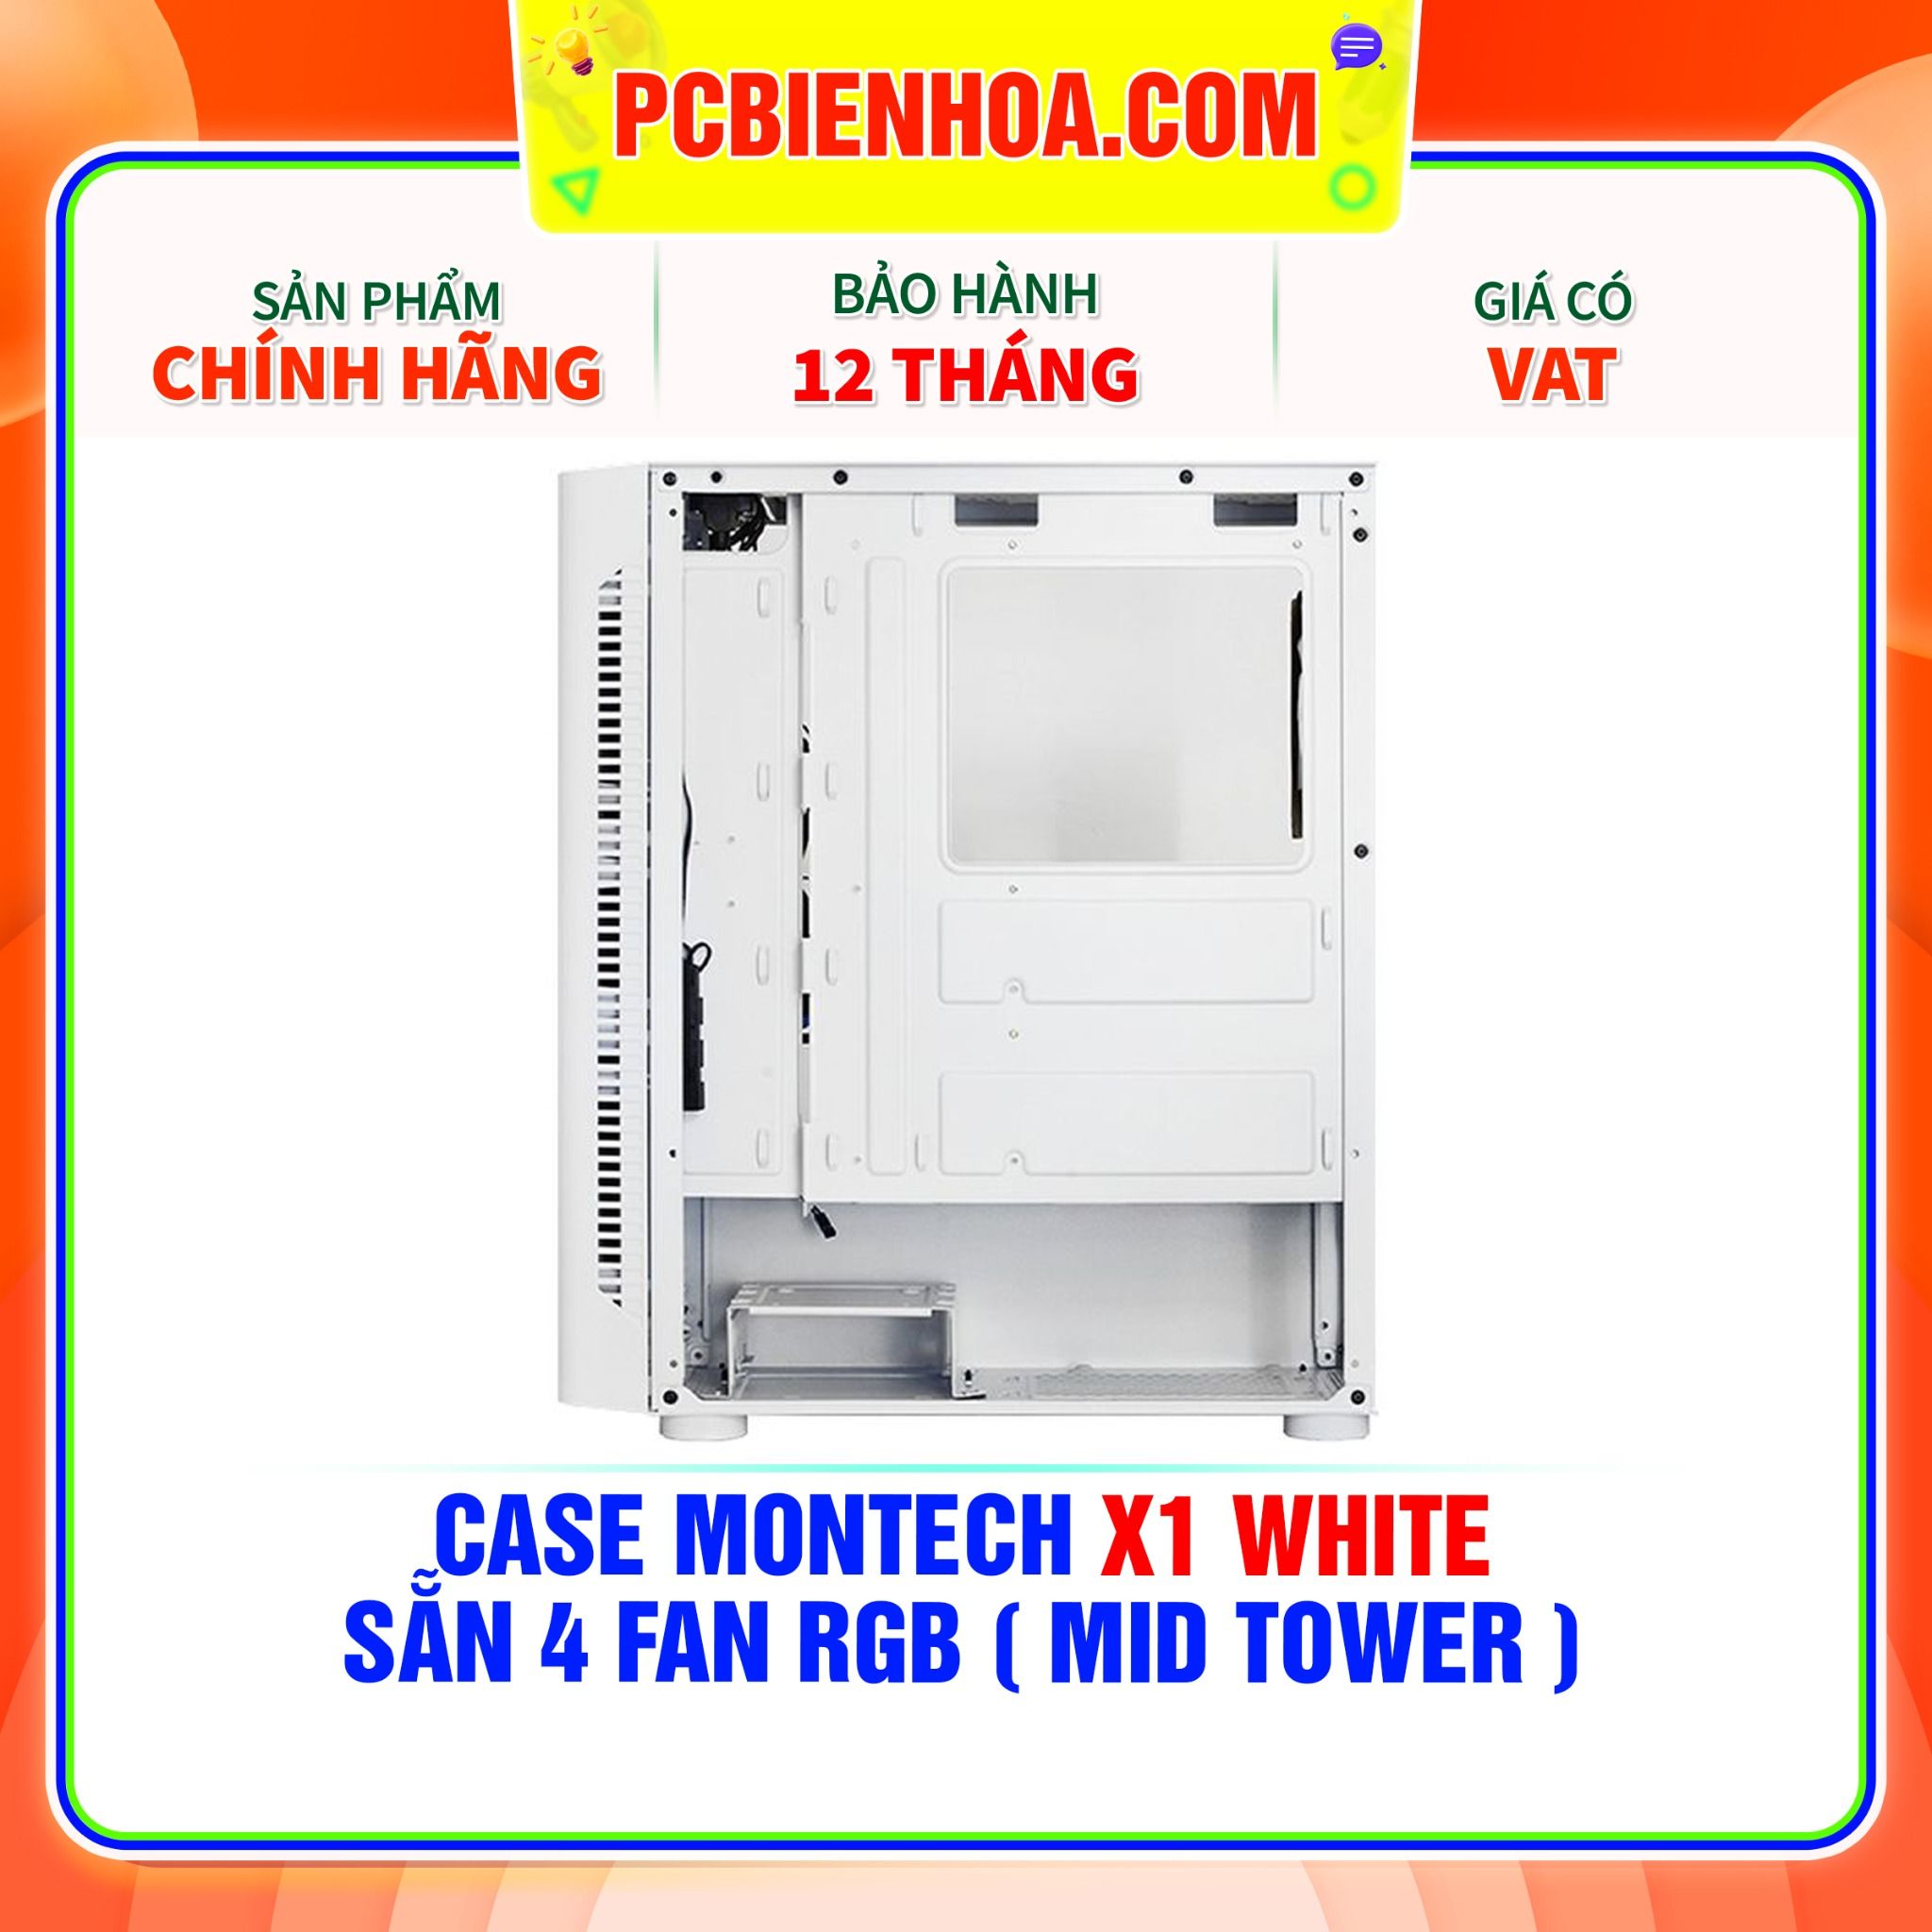  CASE MONTECH X1 WHITE - SẴN 4 FAN RGB ( MID TOWER ) 